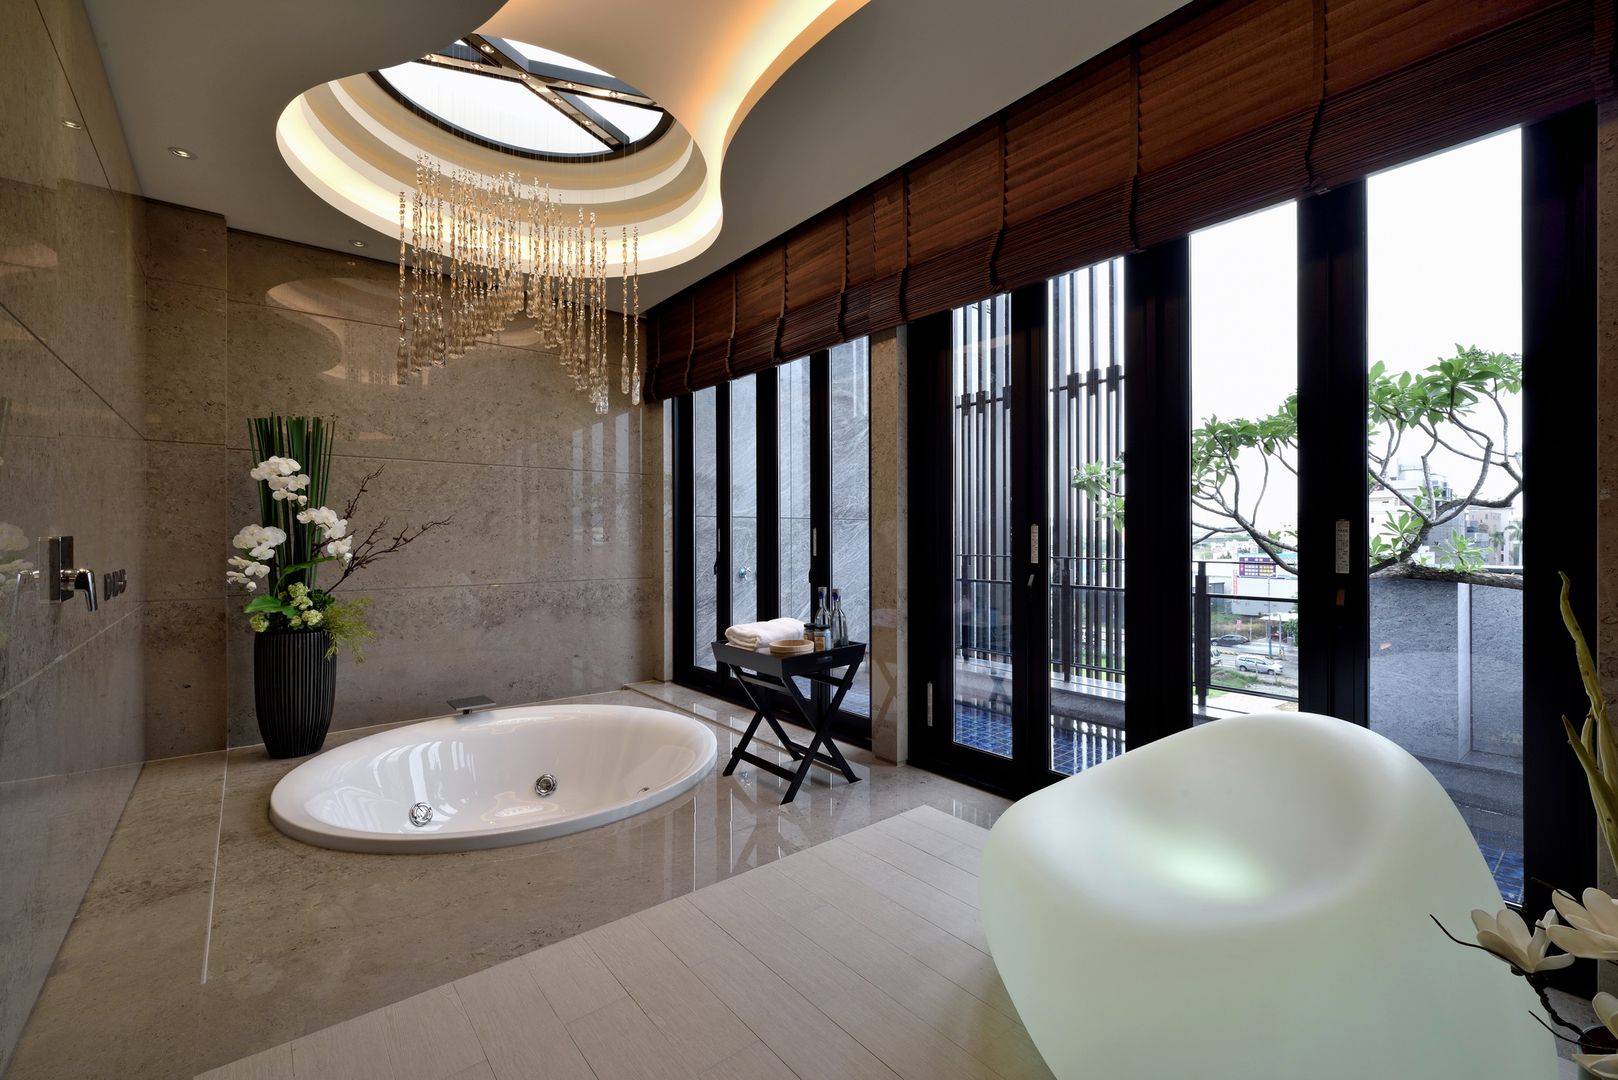 A cozy villa that enables you to escape life’s hustle!, 十邑設計 王勝正 Posamo Design 十邑設計 王勝正 Posamo Design Eclectic style bathrooms